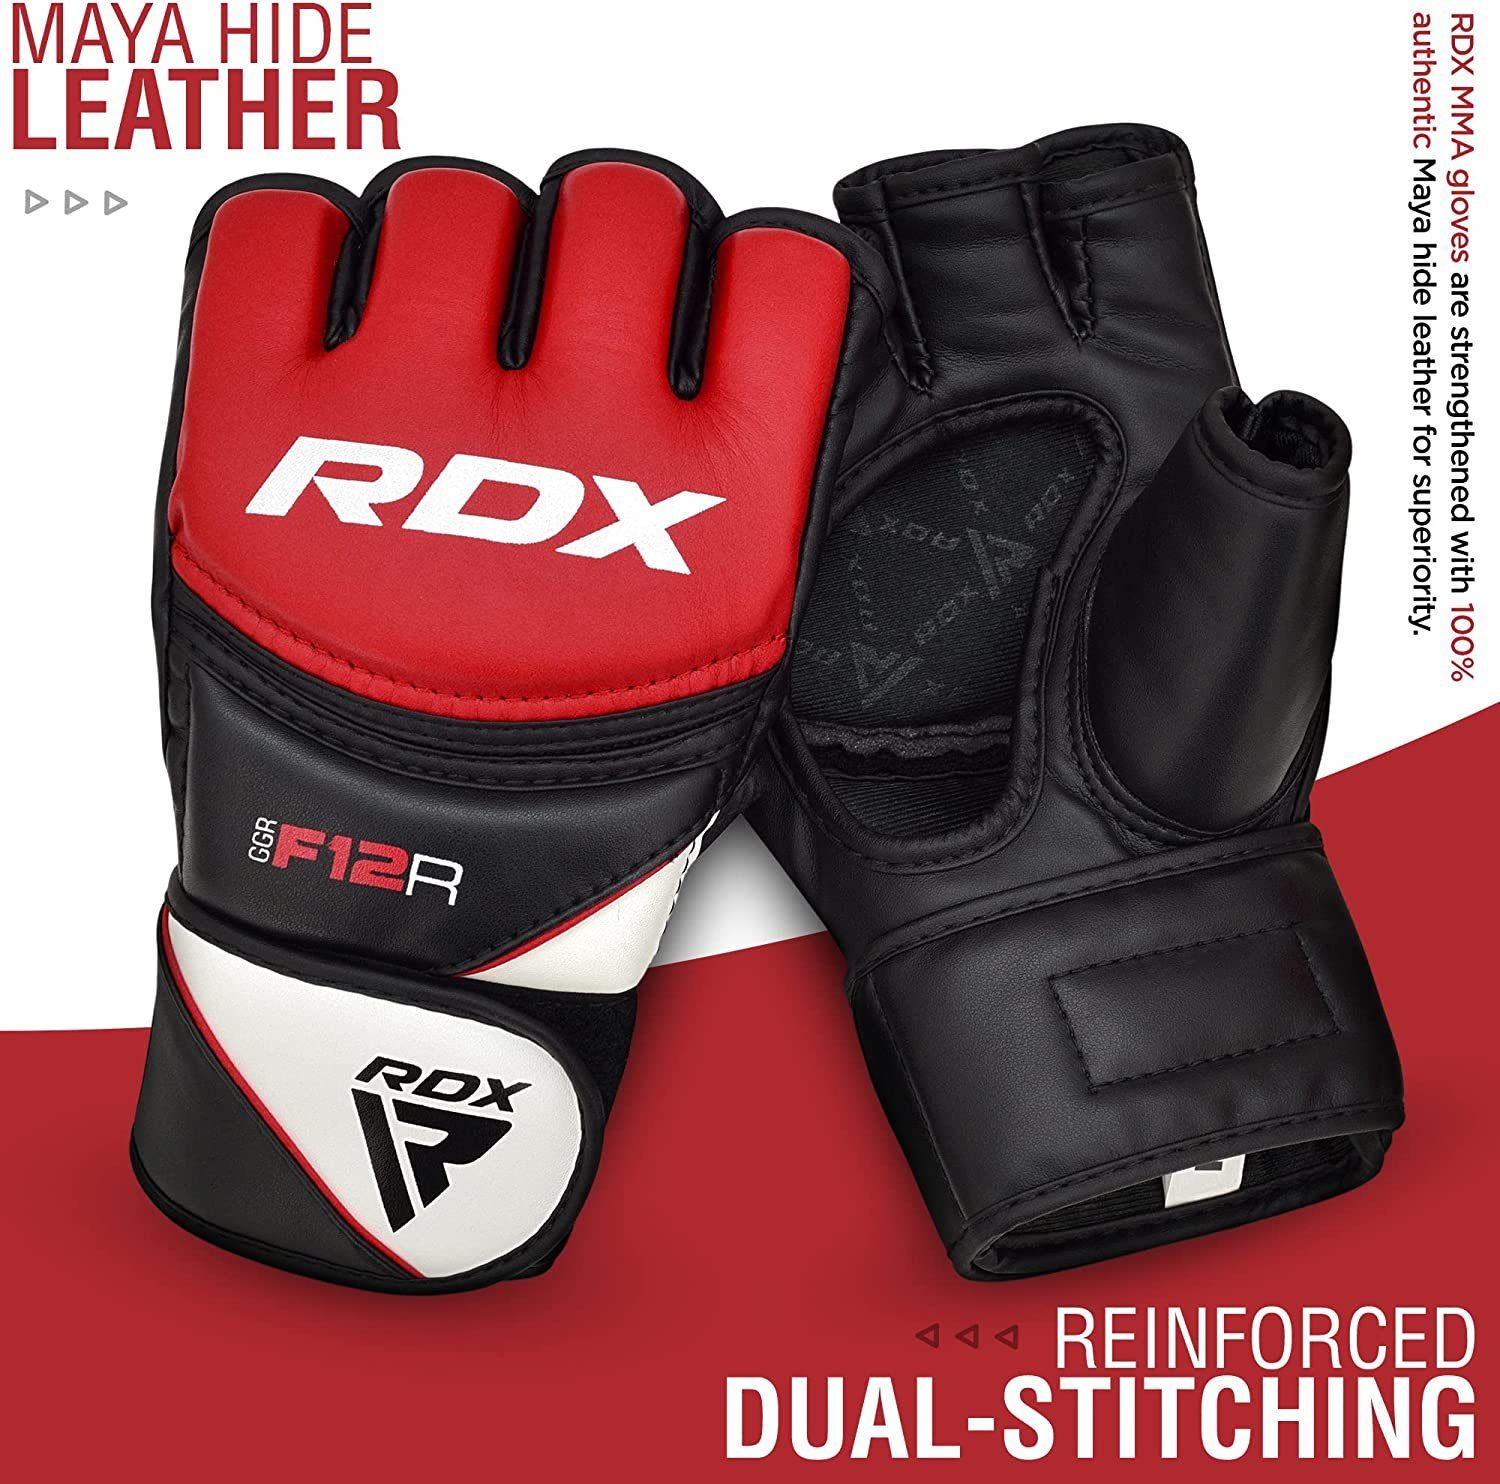 RDX Sports Professionelle RDX Red MMA-Handschuhe MMA MMA Gloves Handschuhe, Kampfsport Boxsack